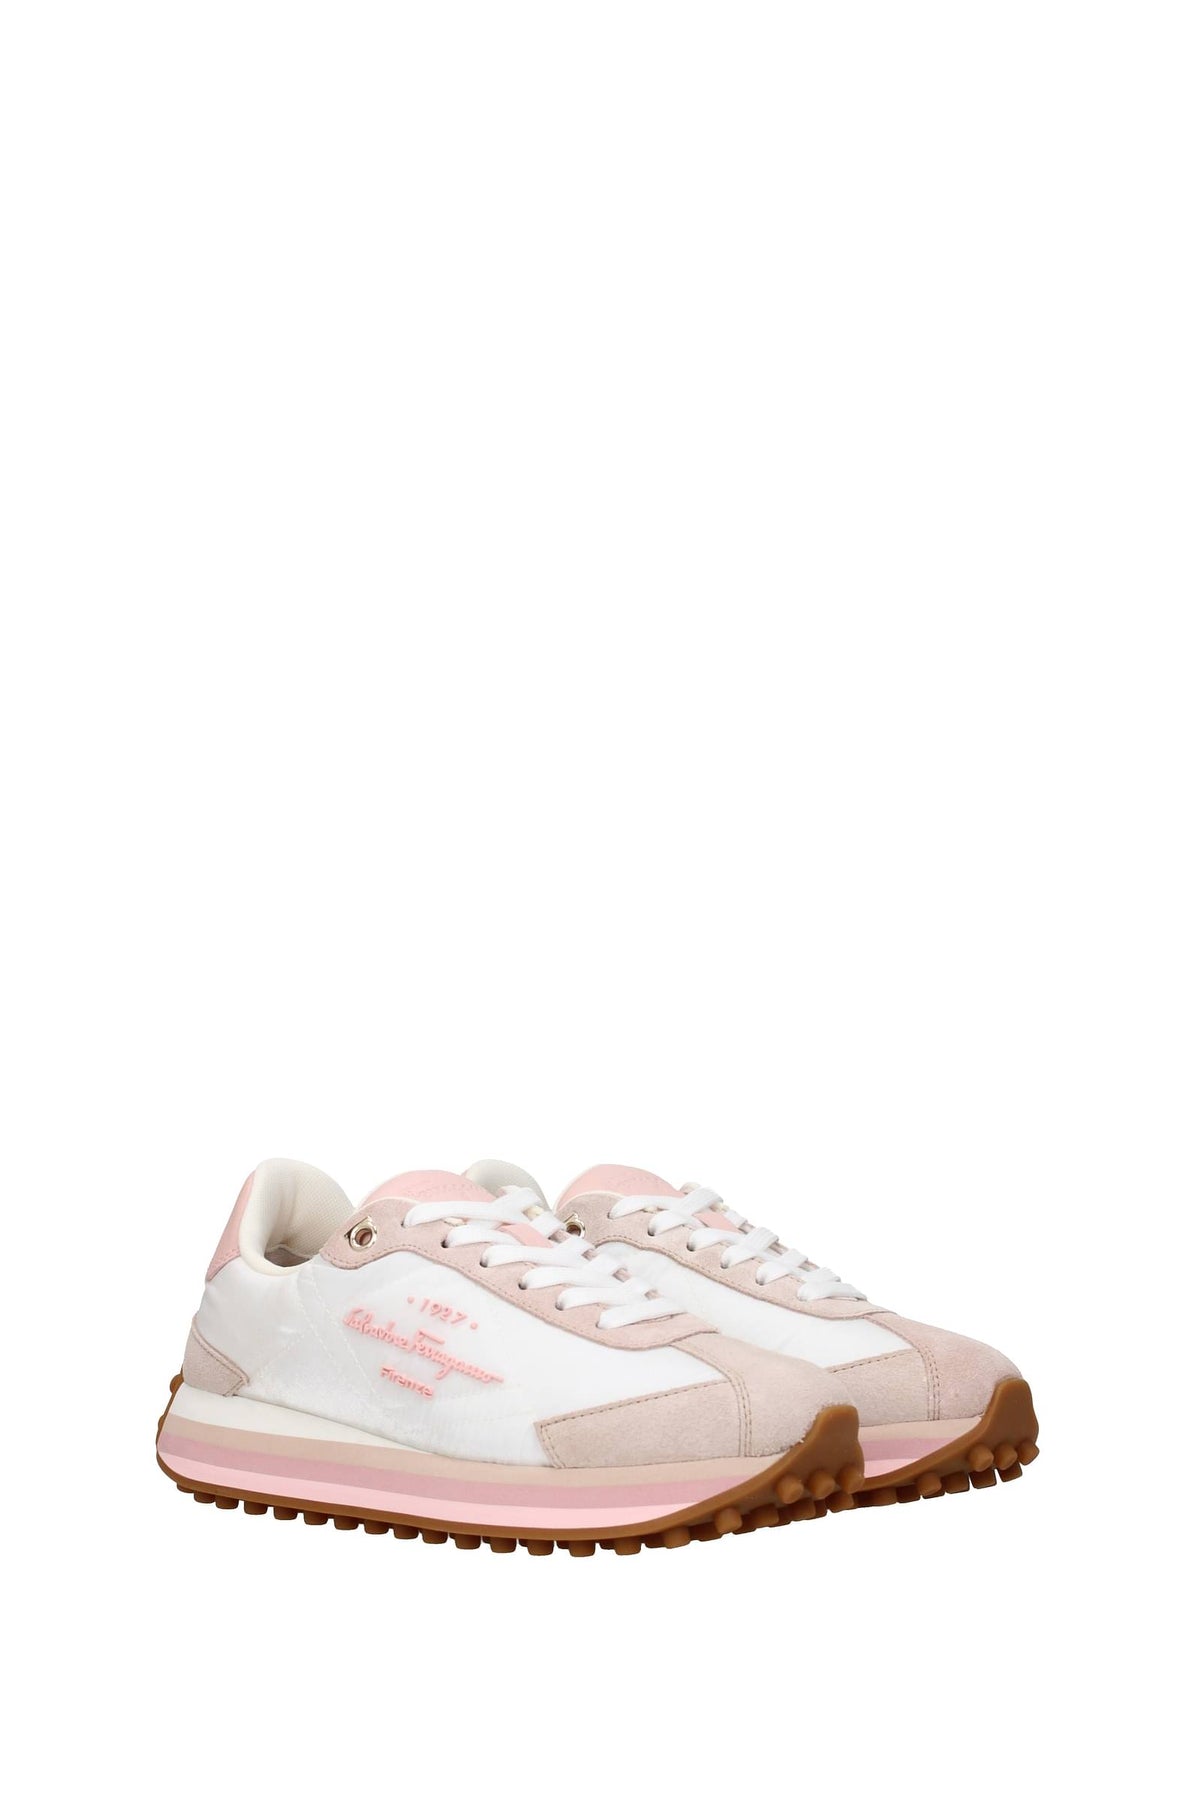 Salvatore Ferragamo Sneakers Women IGGY0756564 Fabric White Pink